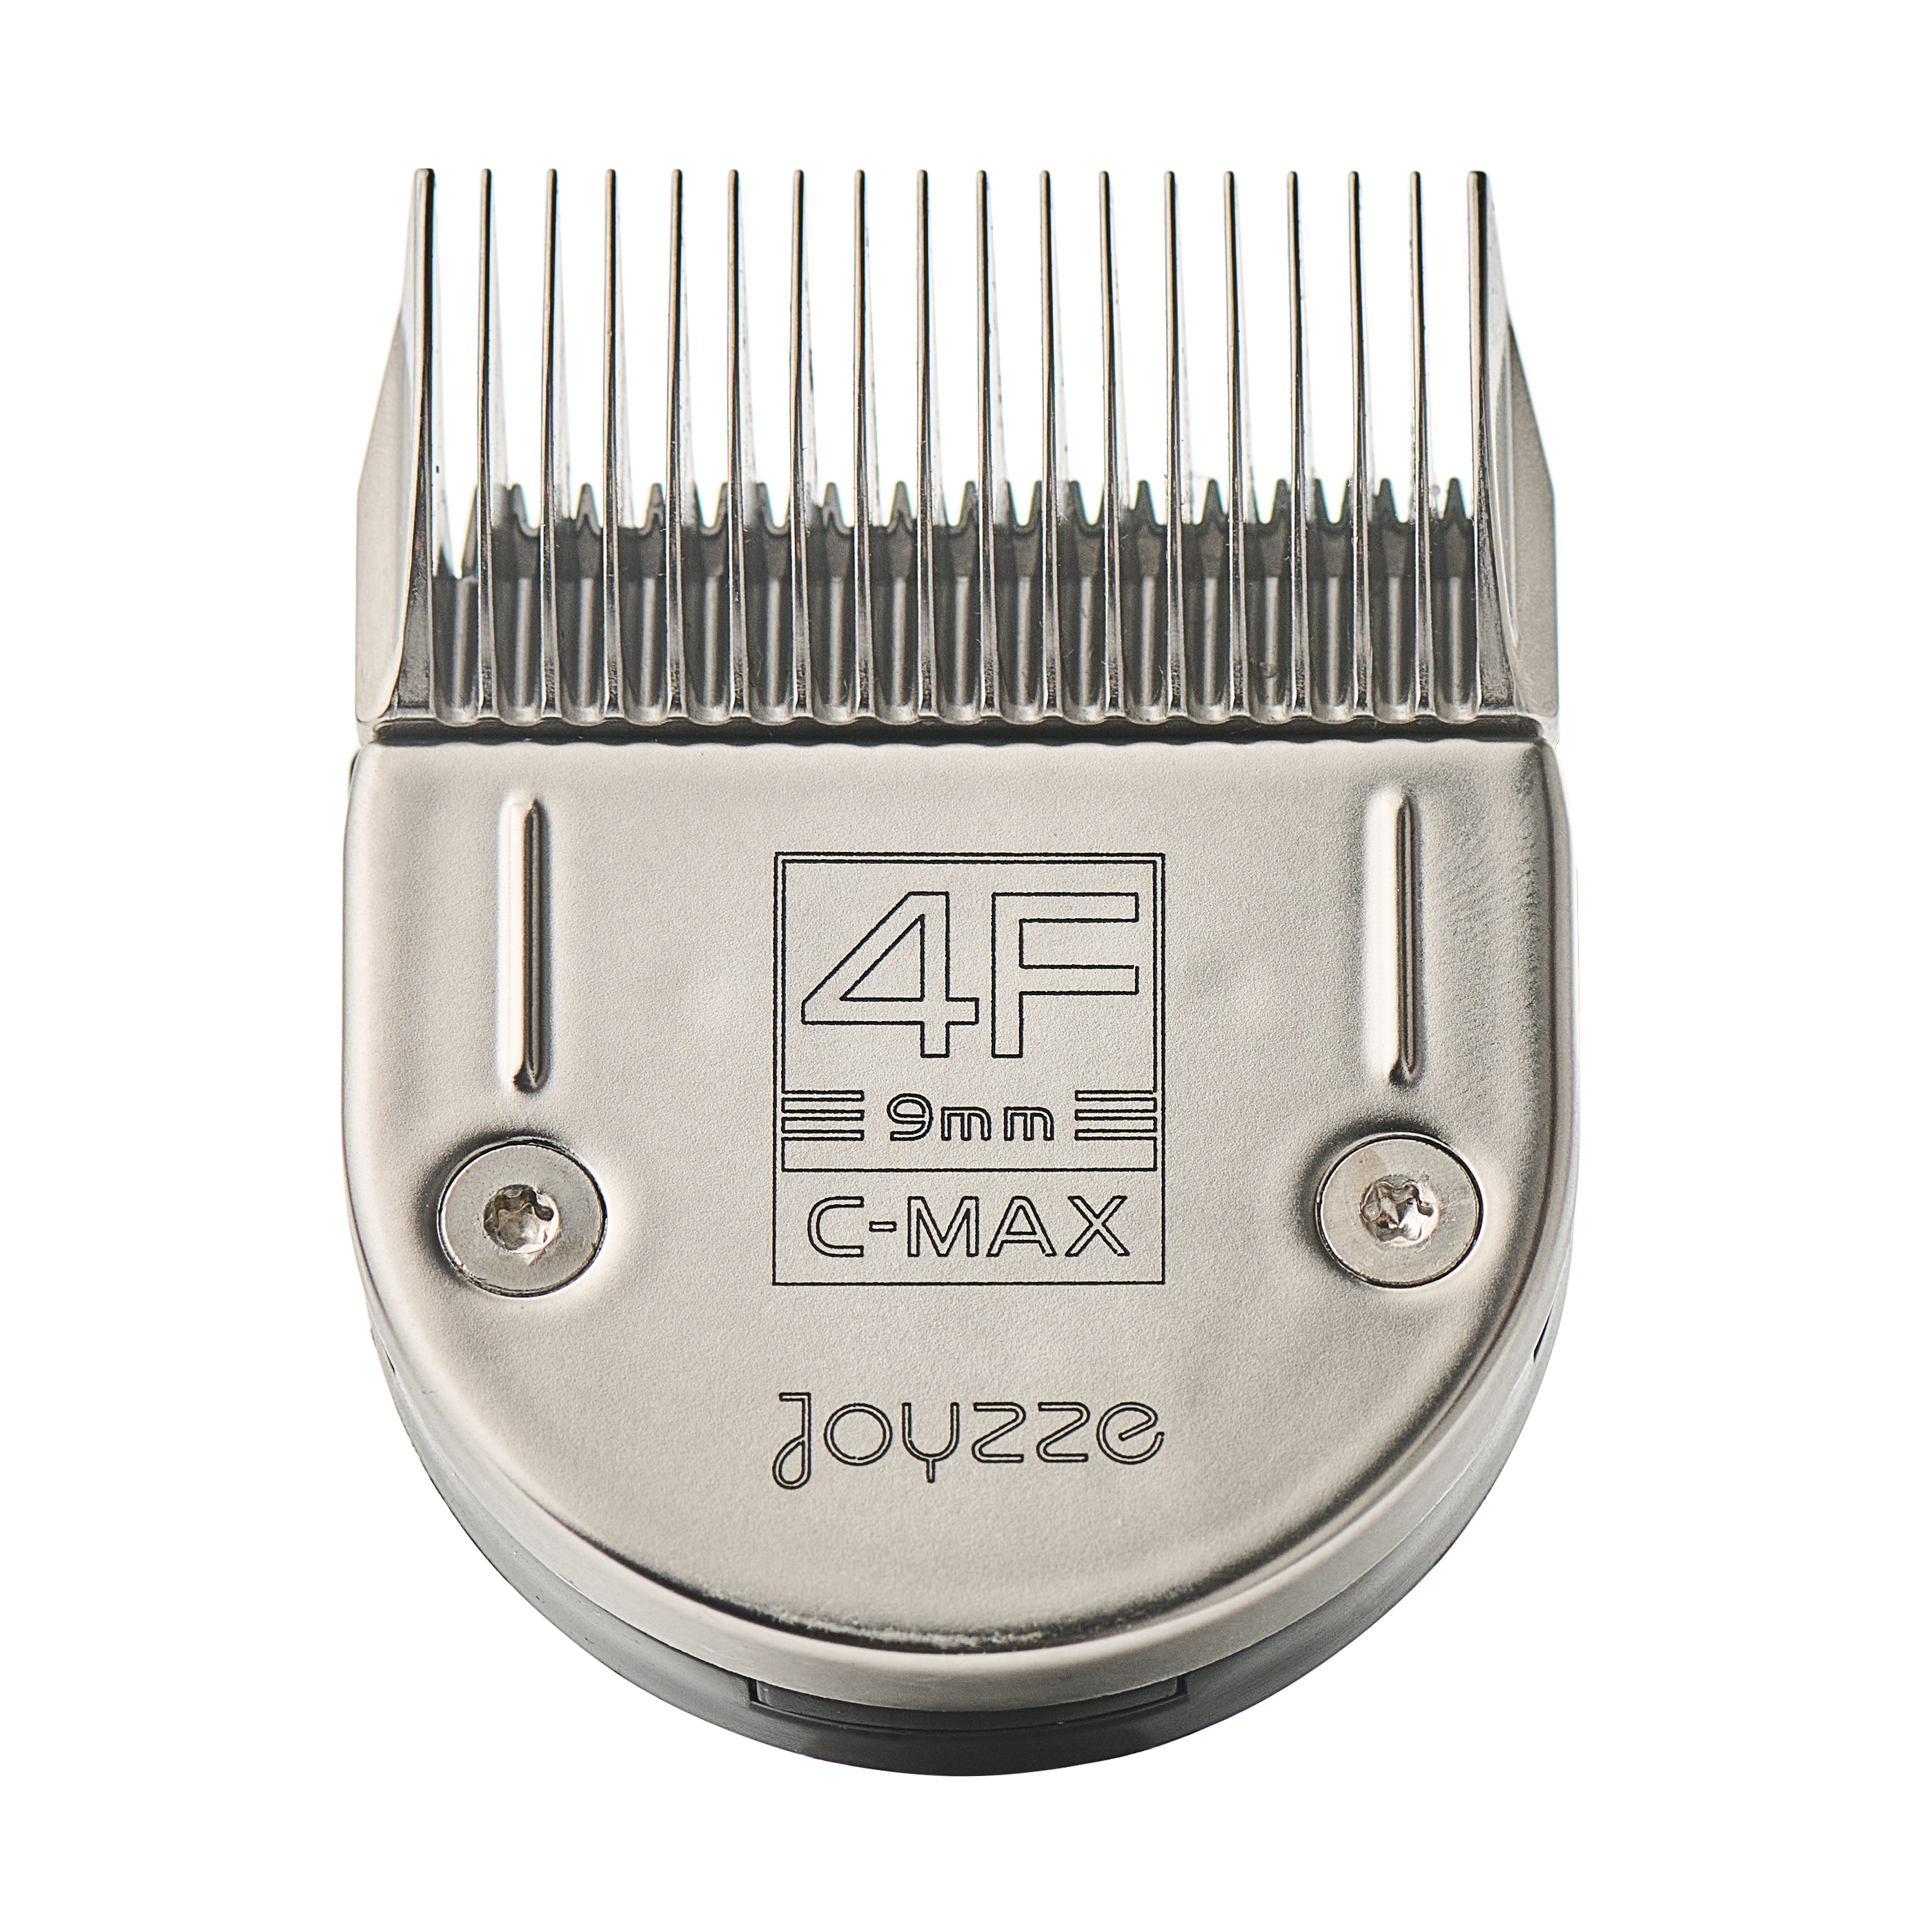 JOYZZE C-MAXブレード4F 9mm 3/8インチ|株式会社QIX